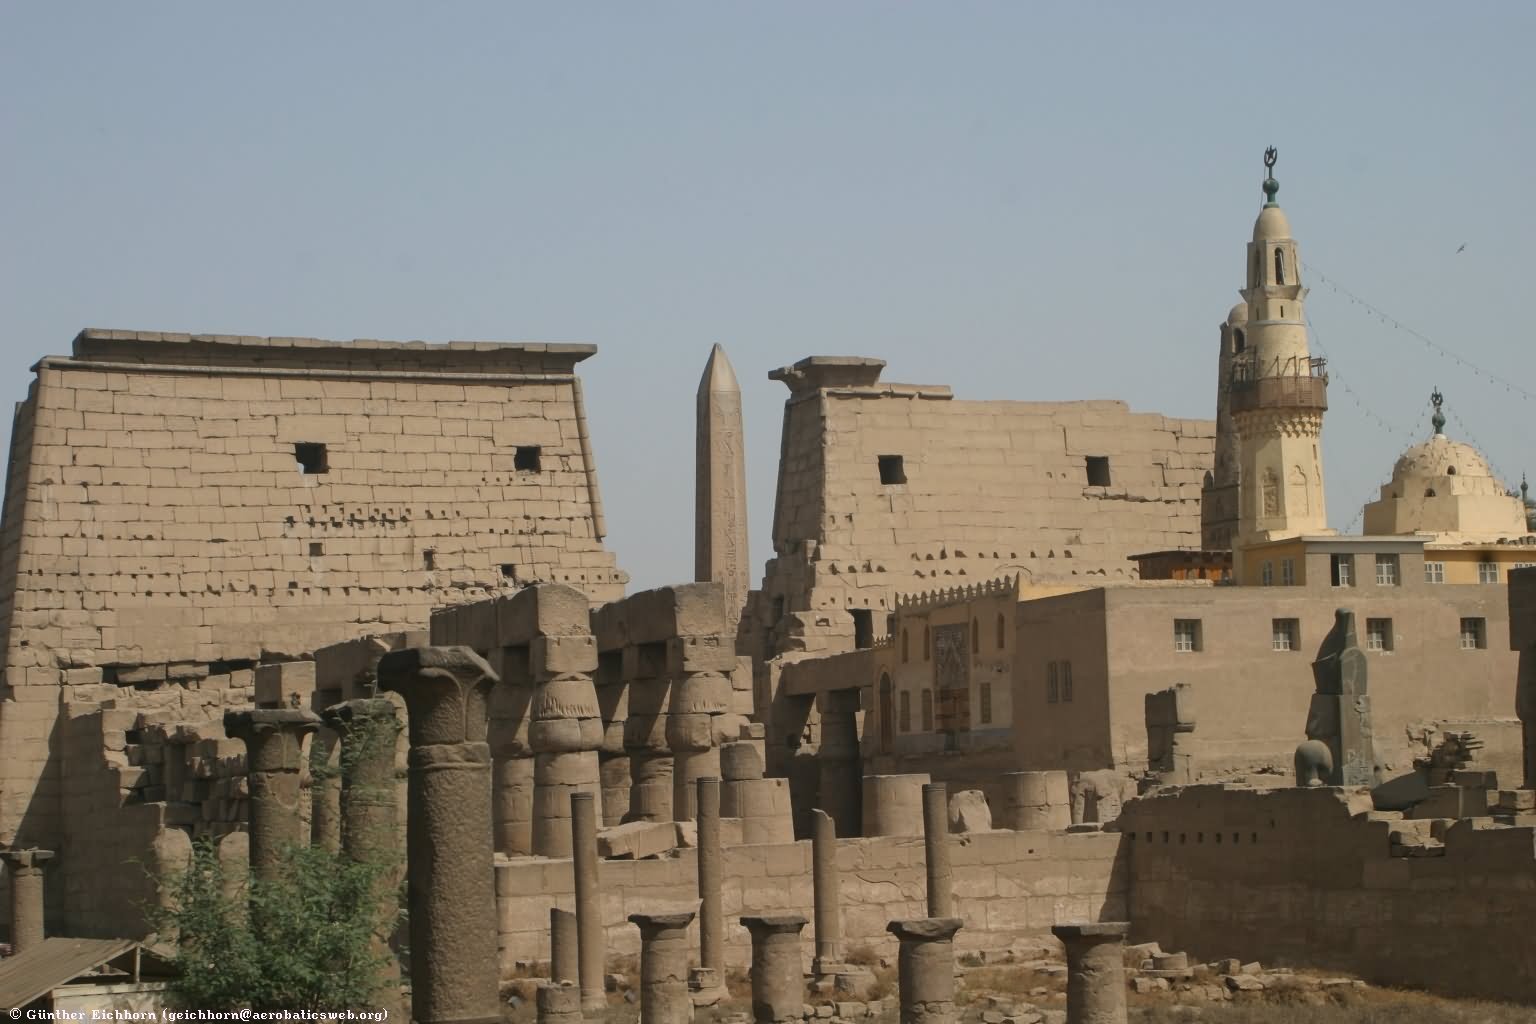 Massive Entrance Gate Of The Luxor Temple